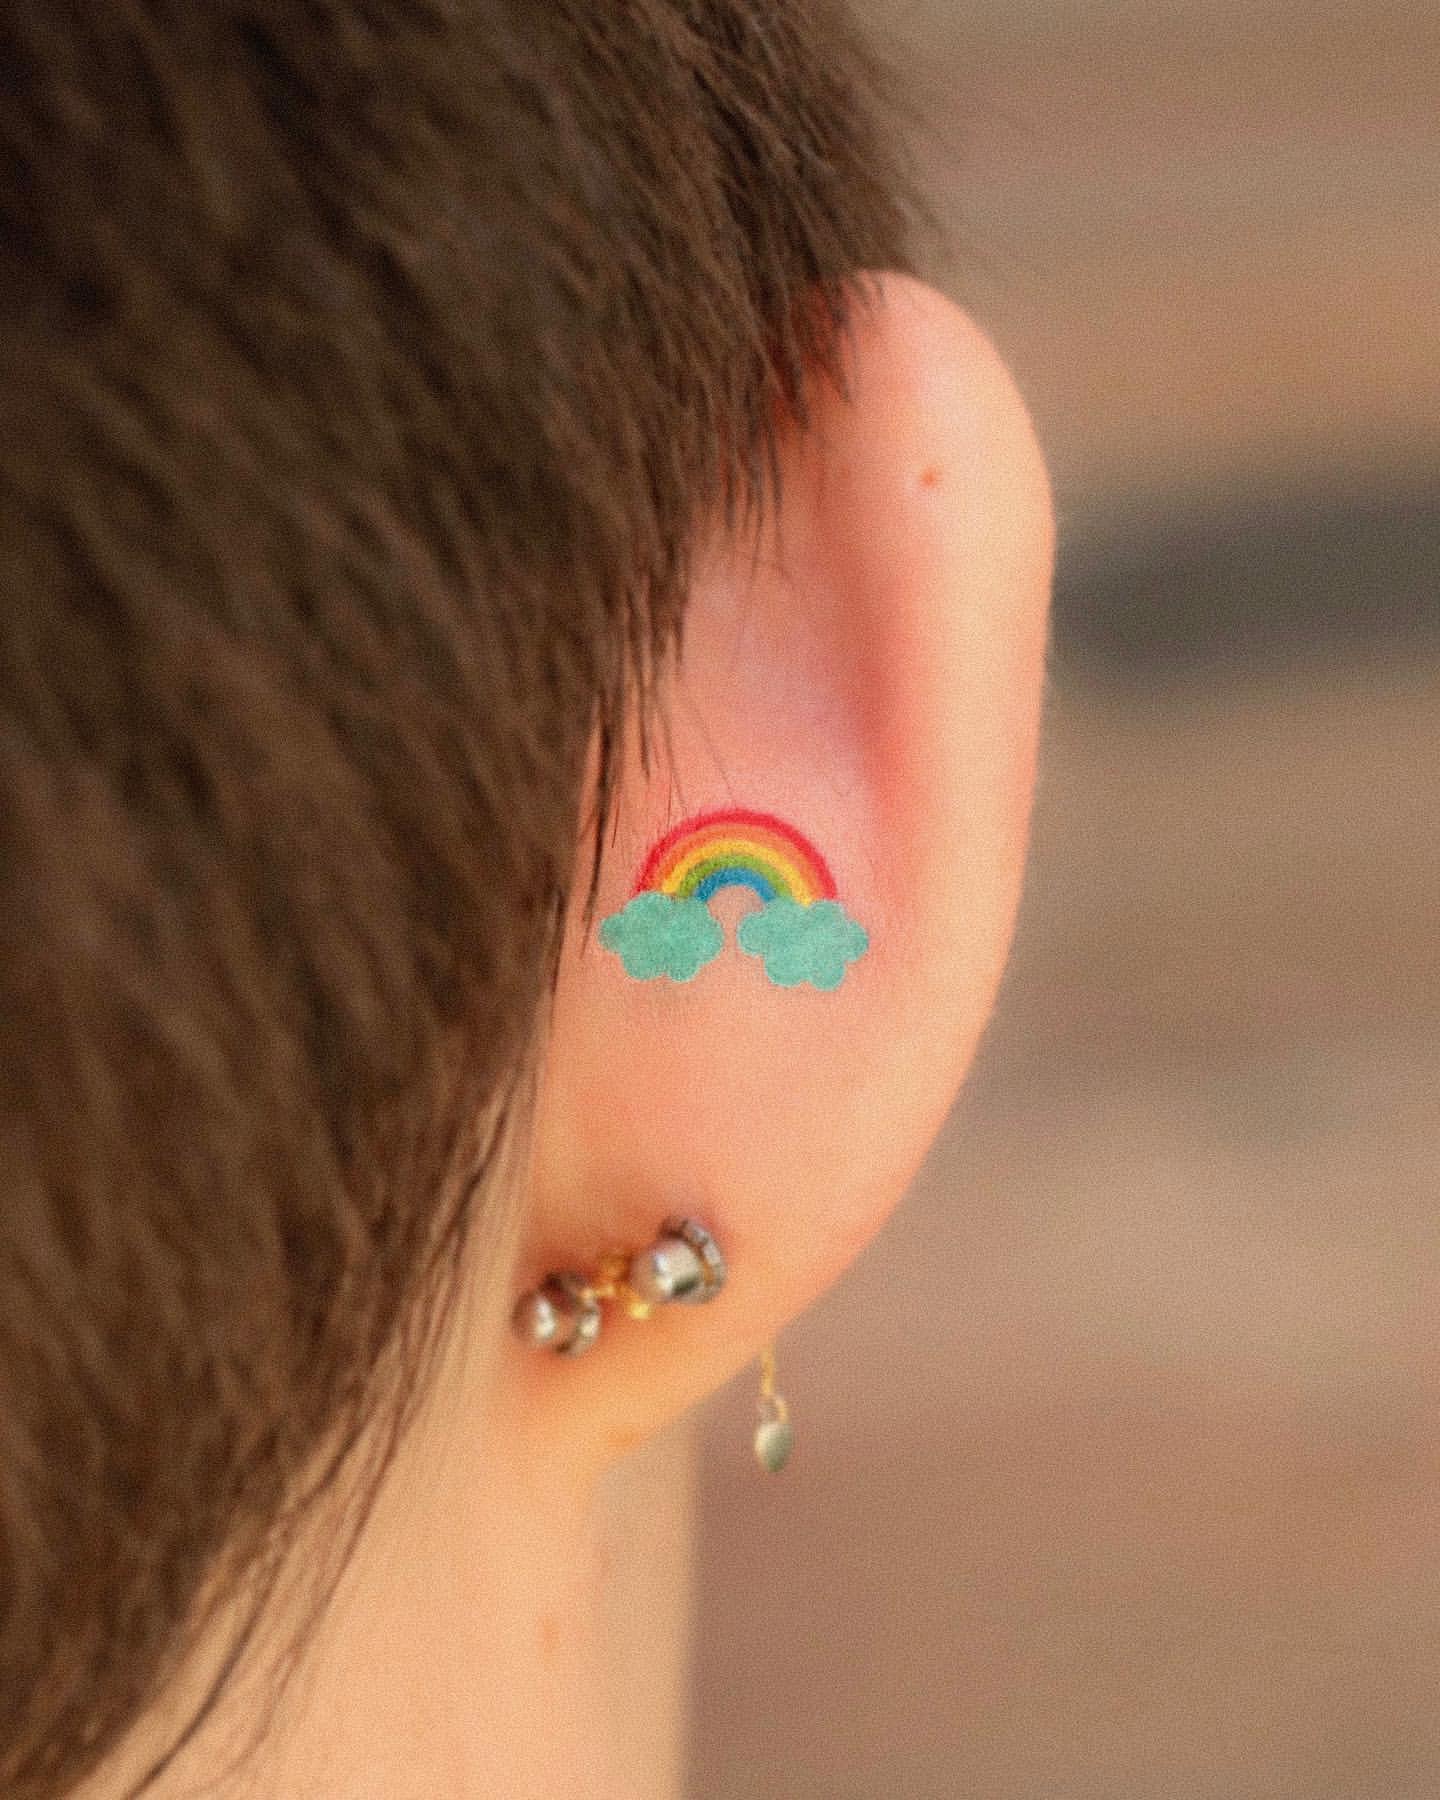 Behind the Ear Tattoos 11